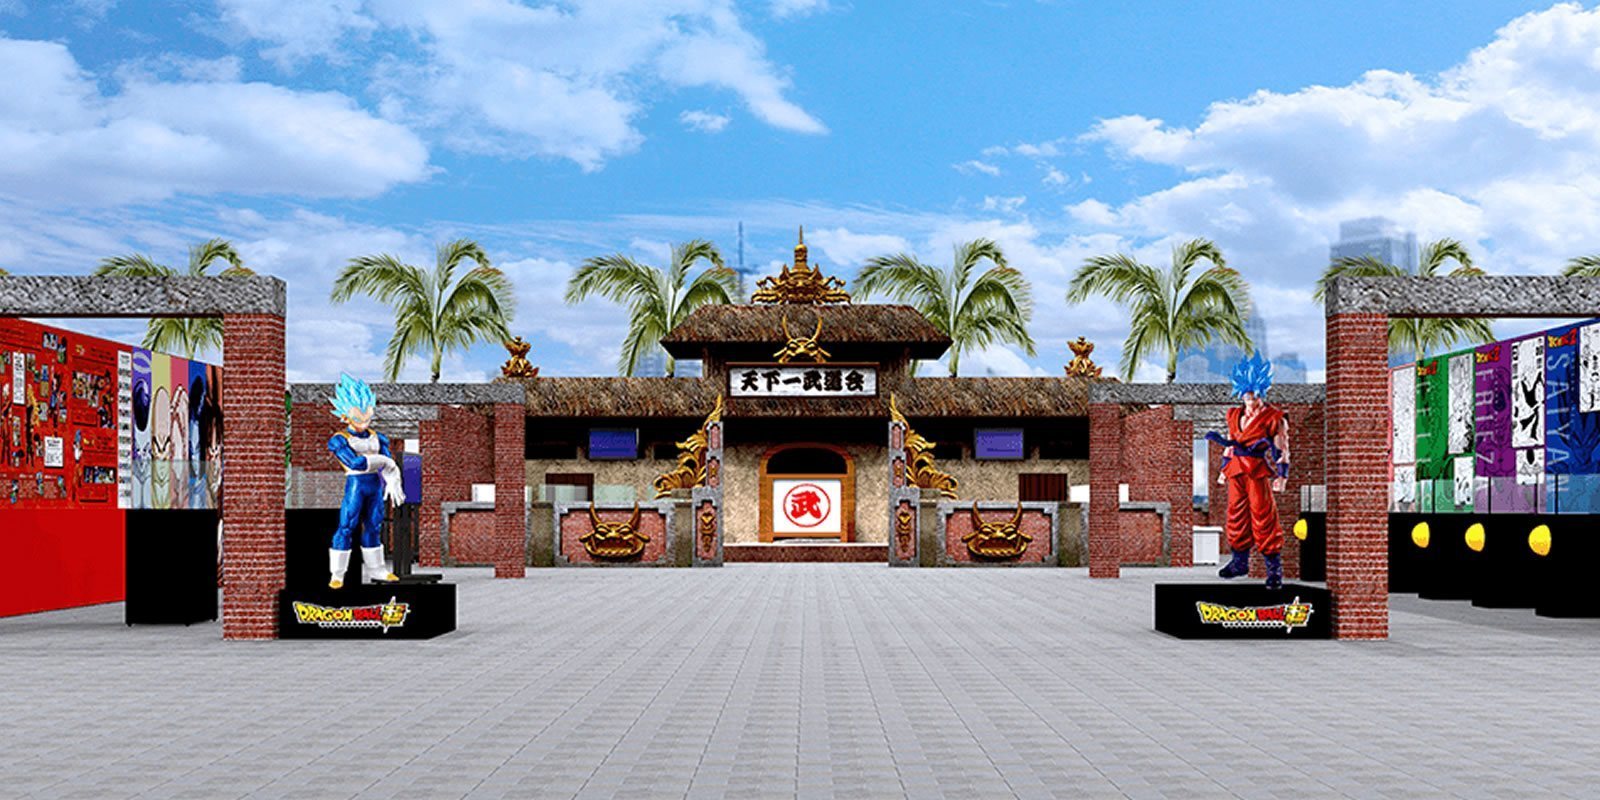 La exposición "Dragon Ball World Adventure" llega a Barcelona en otoño